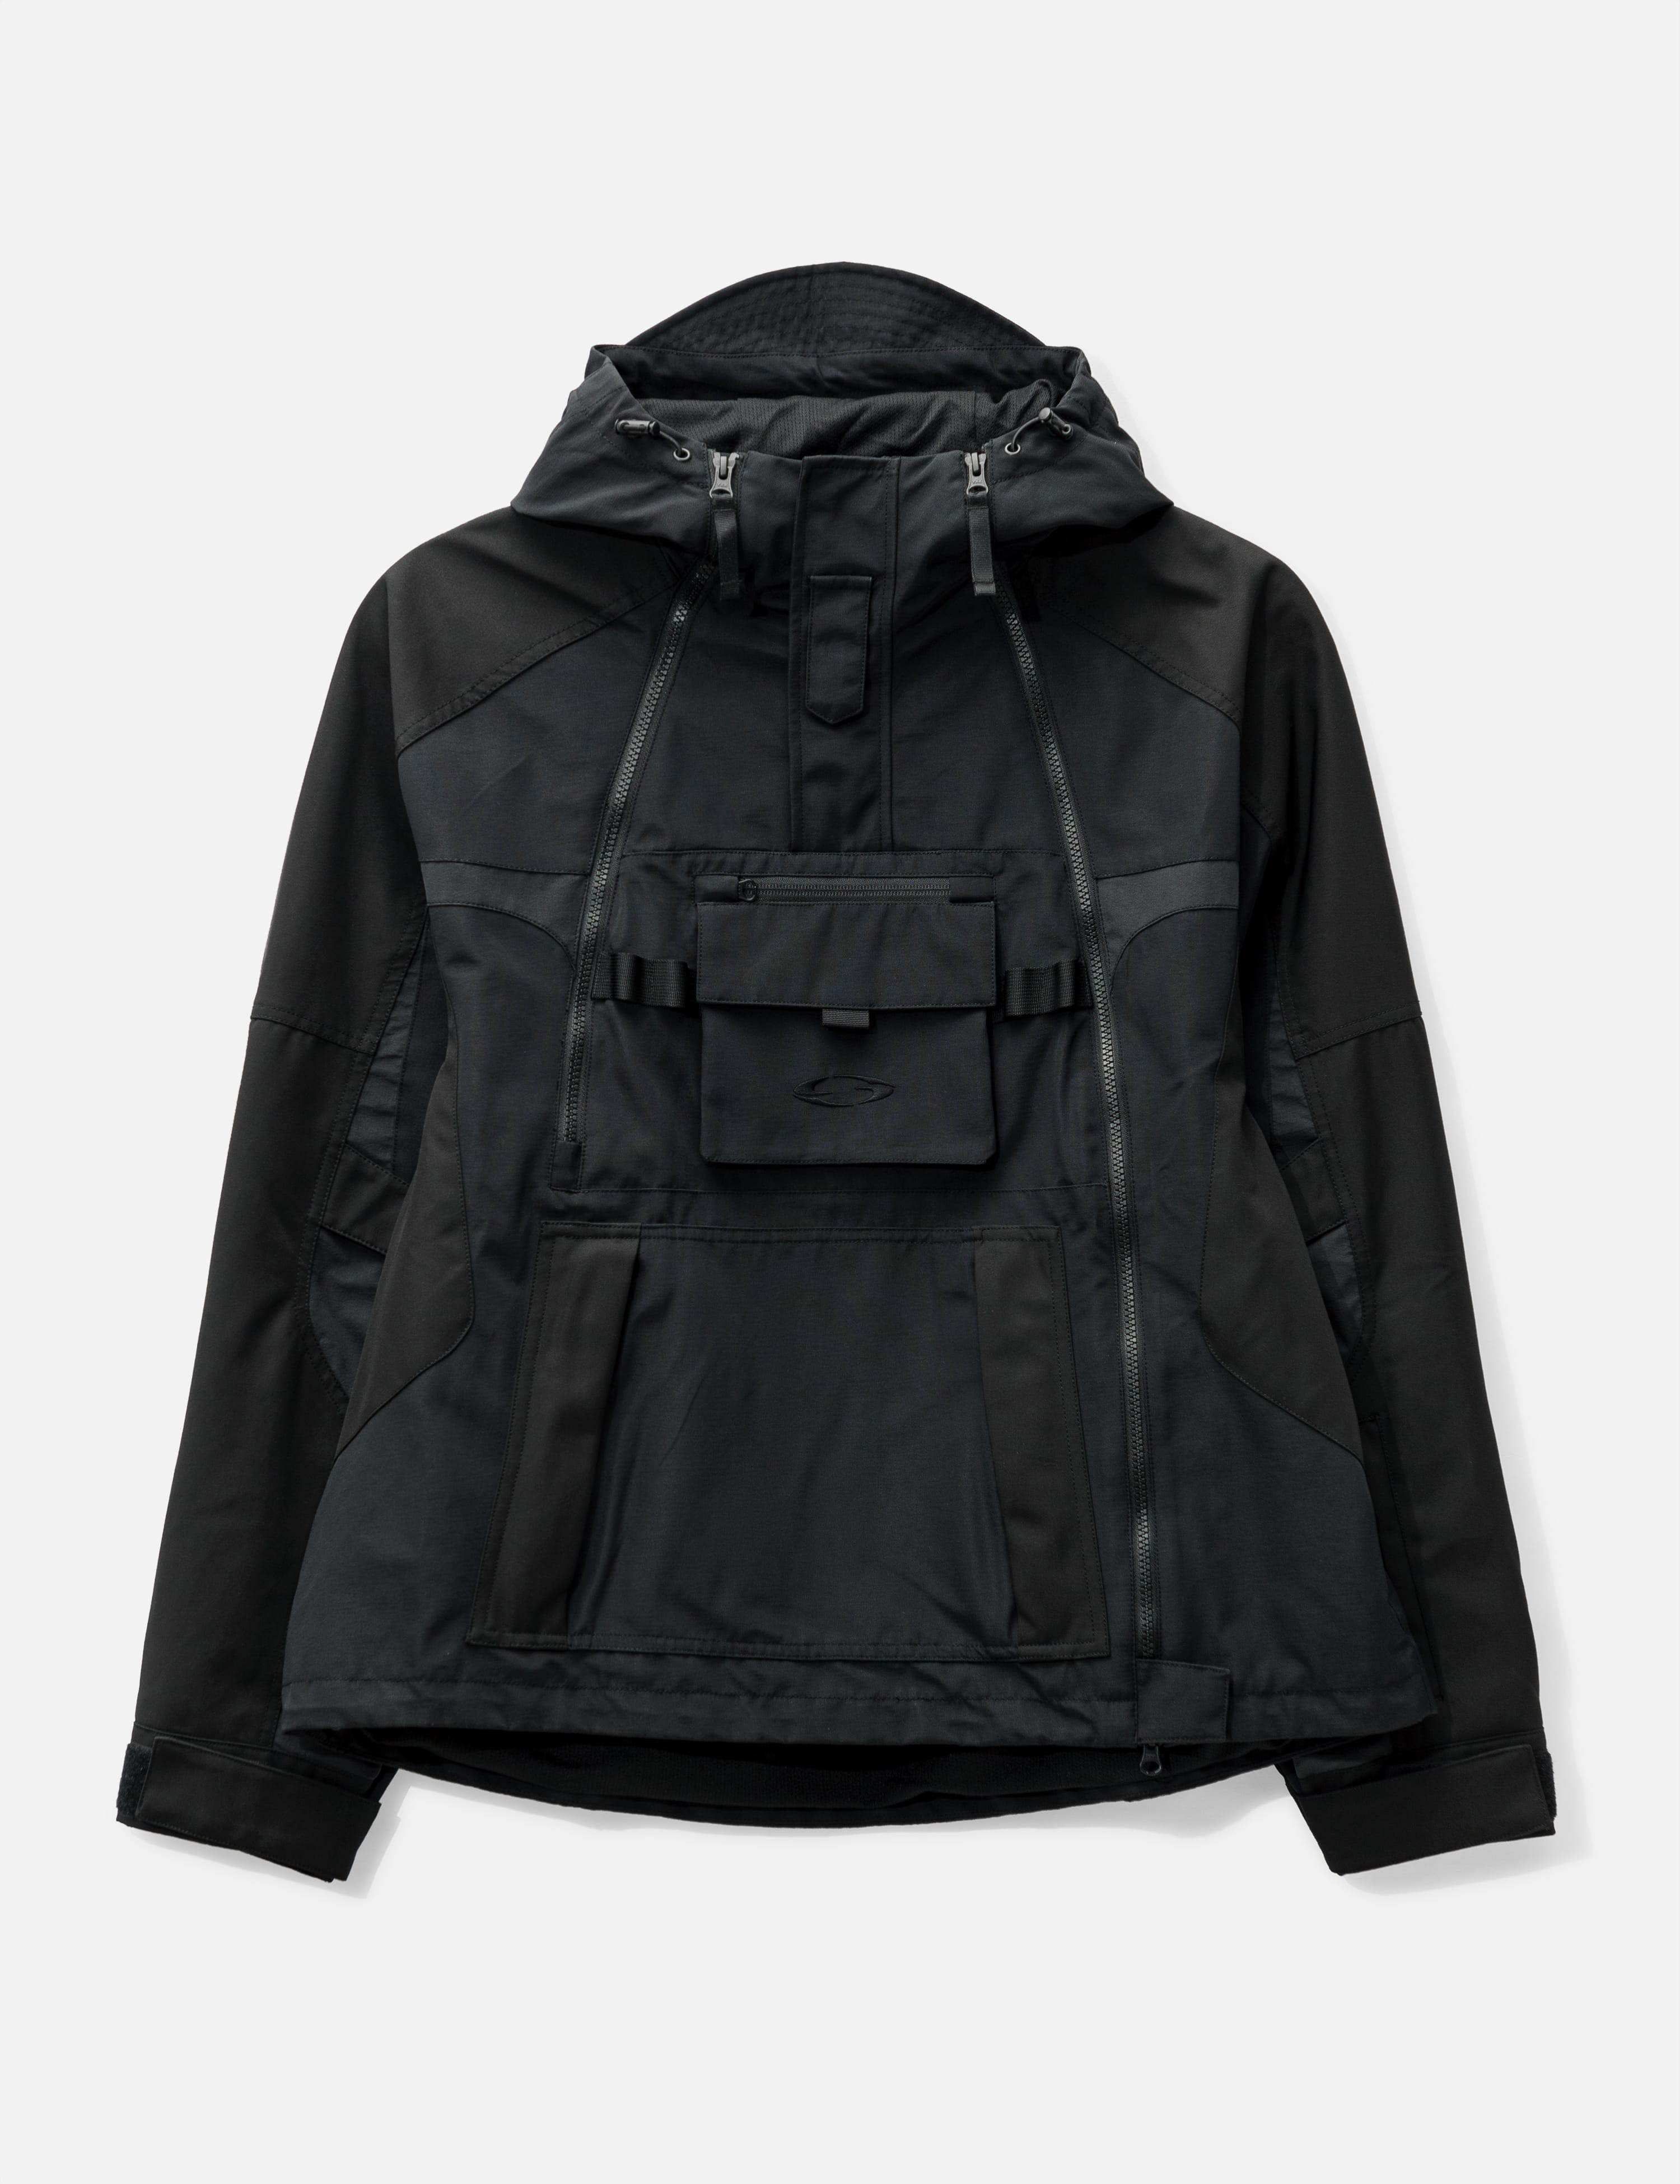 GRAILZ - Technical Shell Jacket | HBX - Globally Curated Fashion